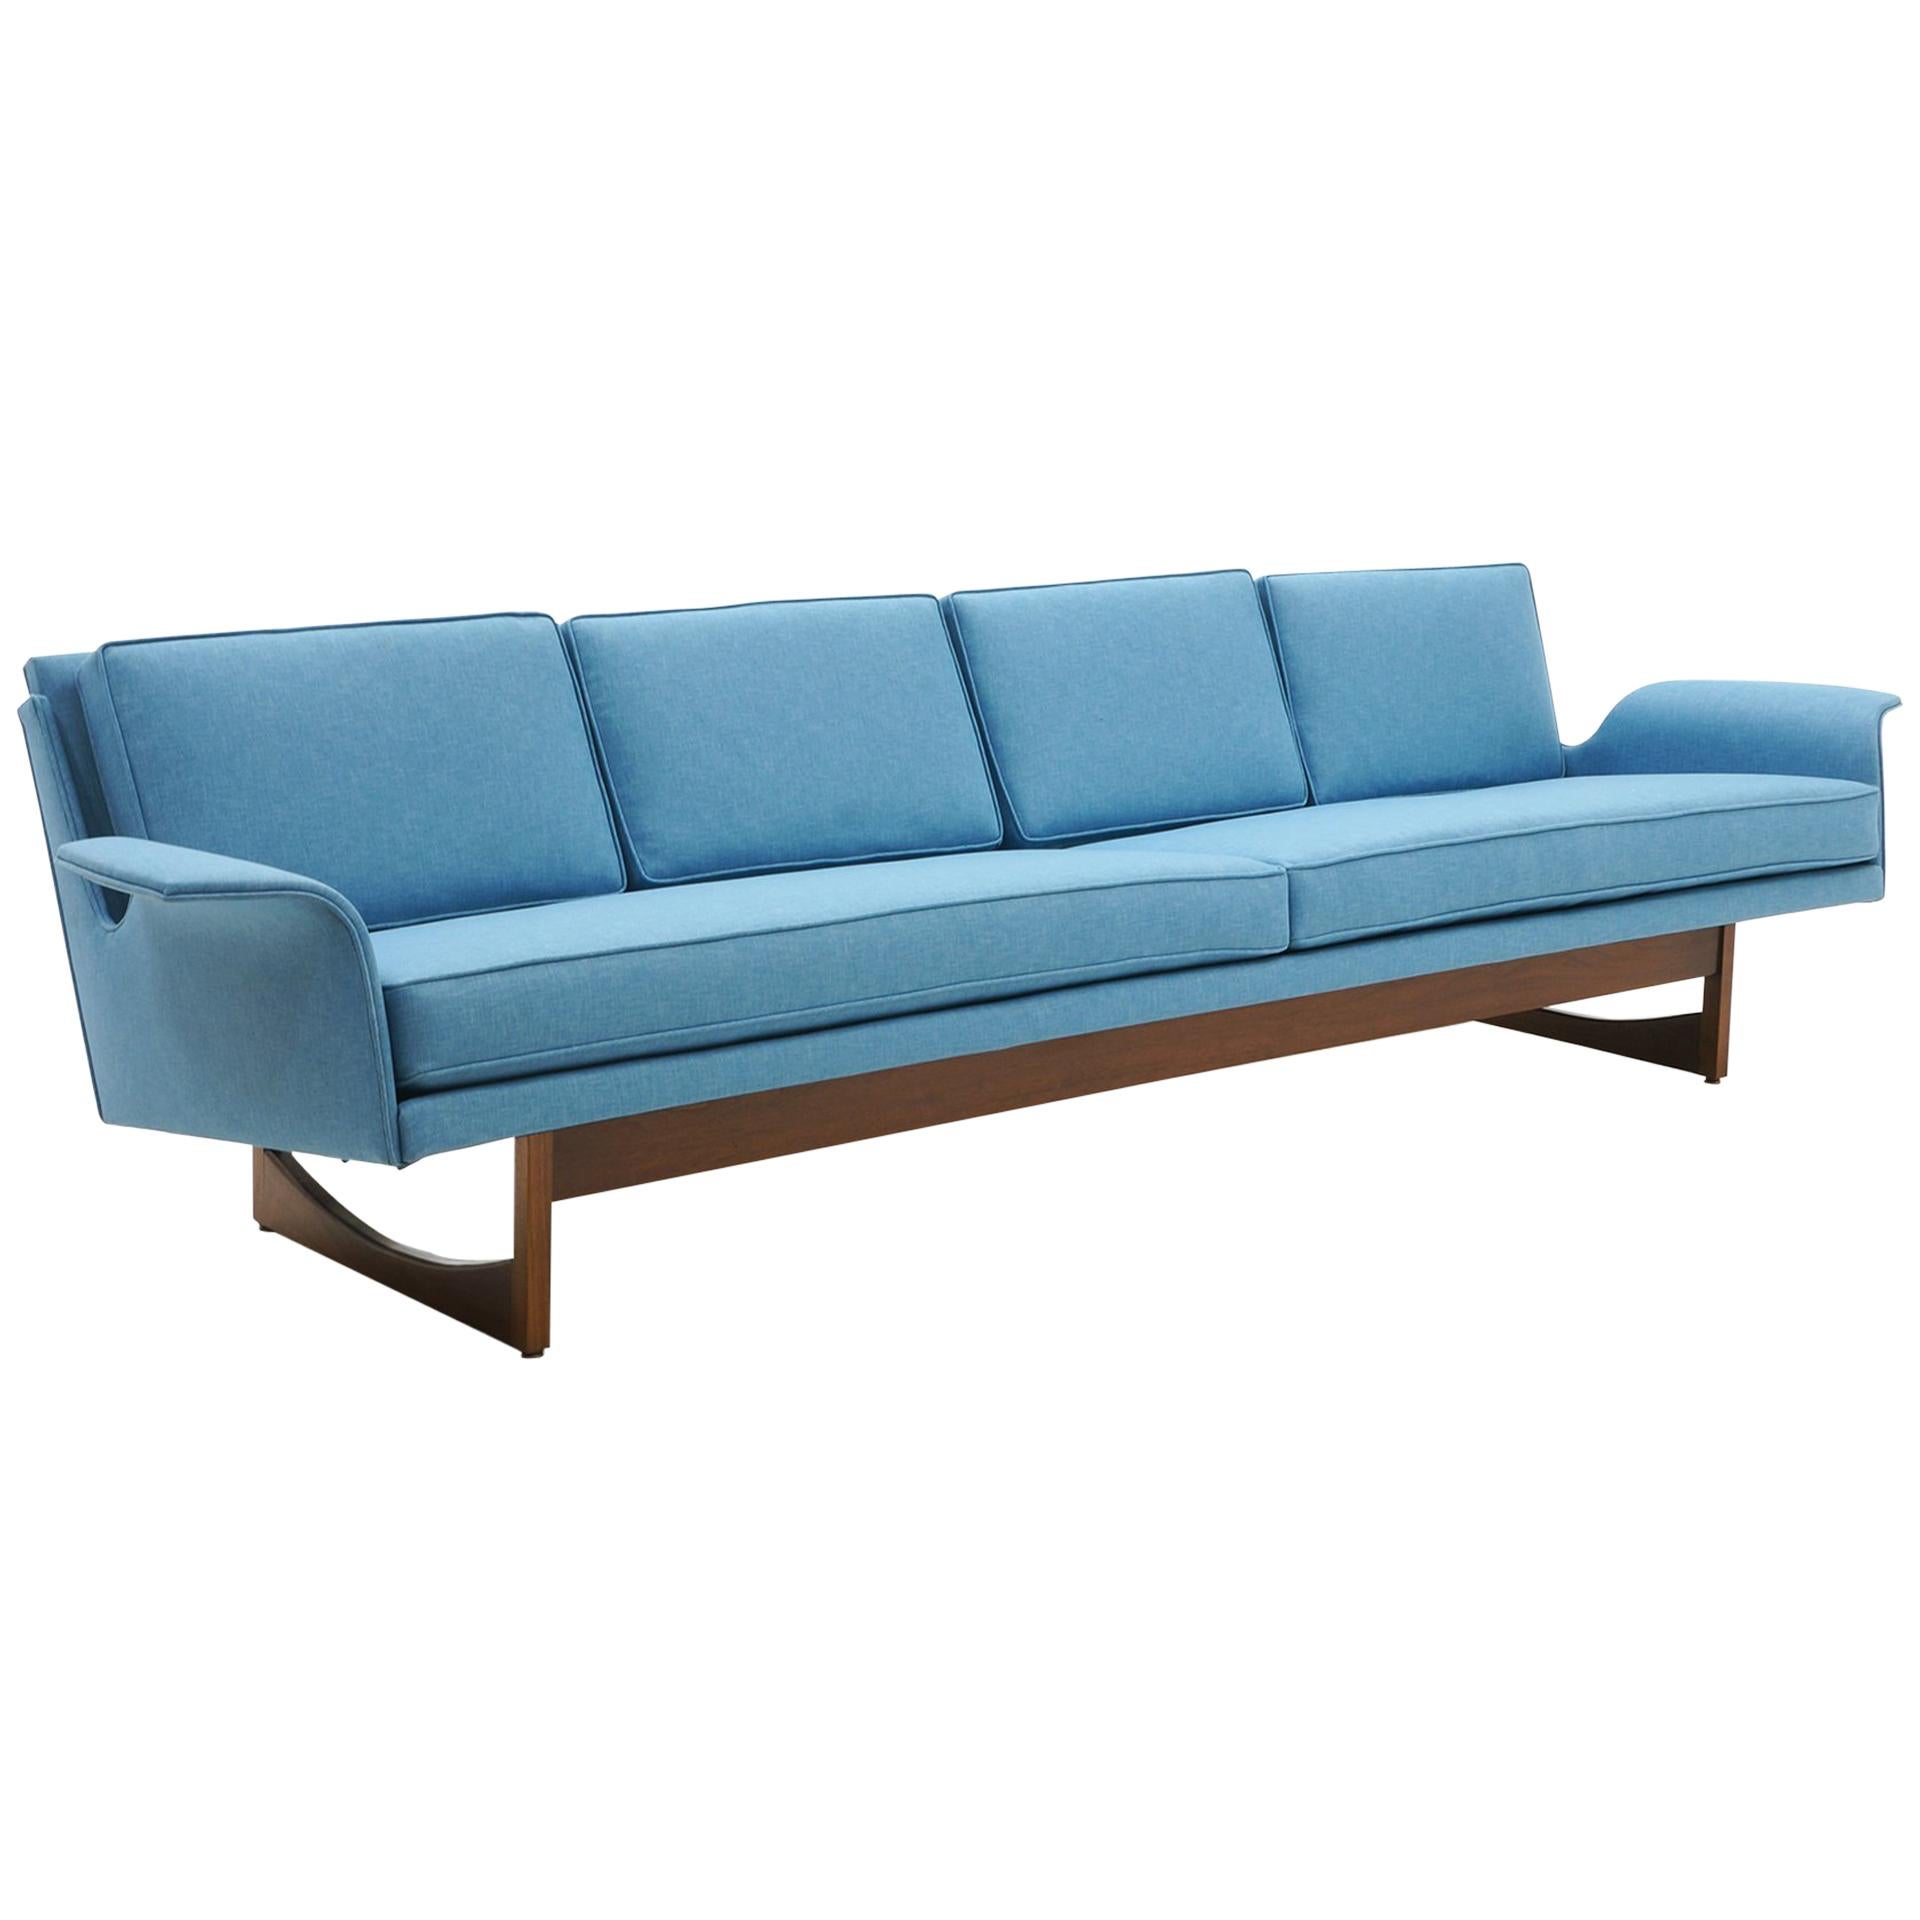 Four-Seat Sofa Possibly Danish Modern or Adrian Pearsall, Beautiful Blue Fabric